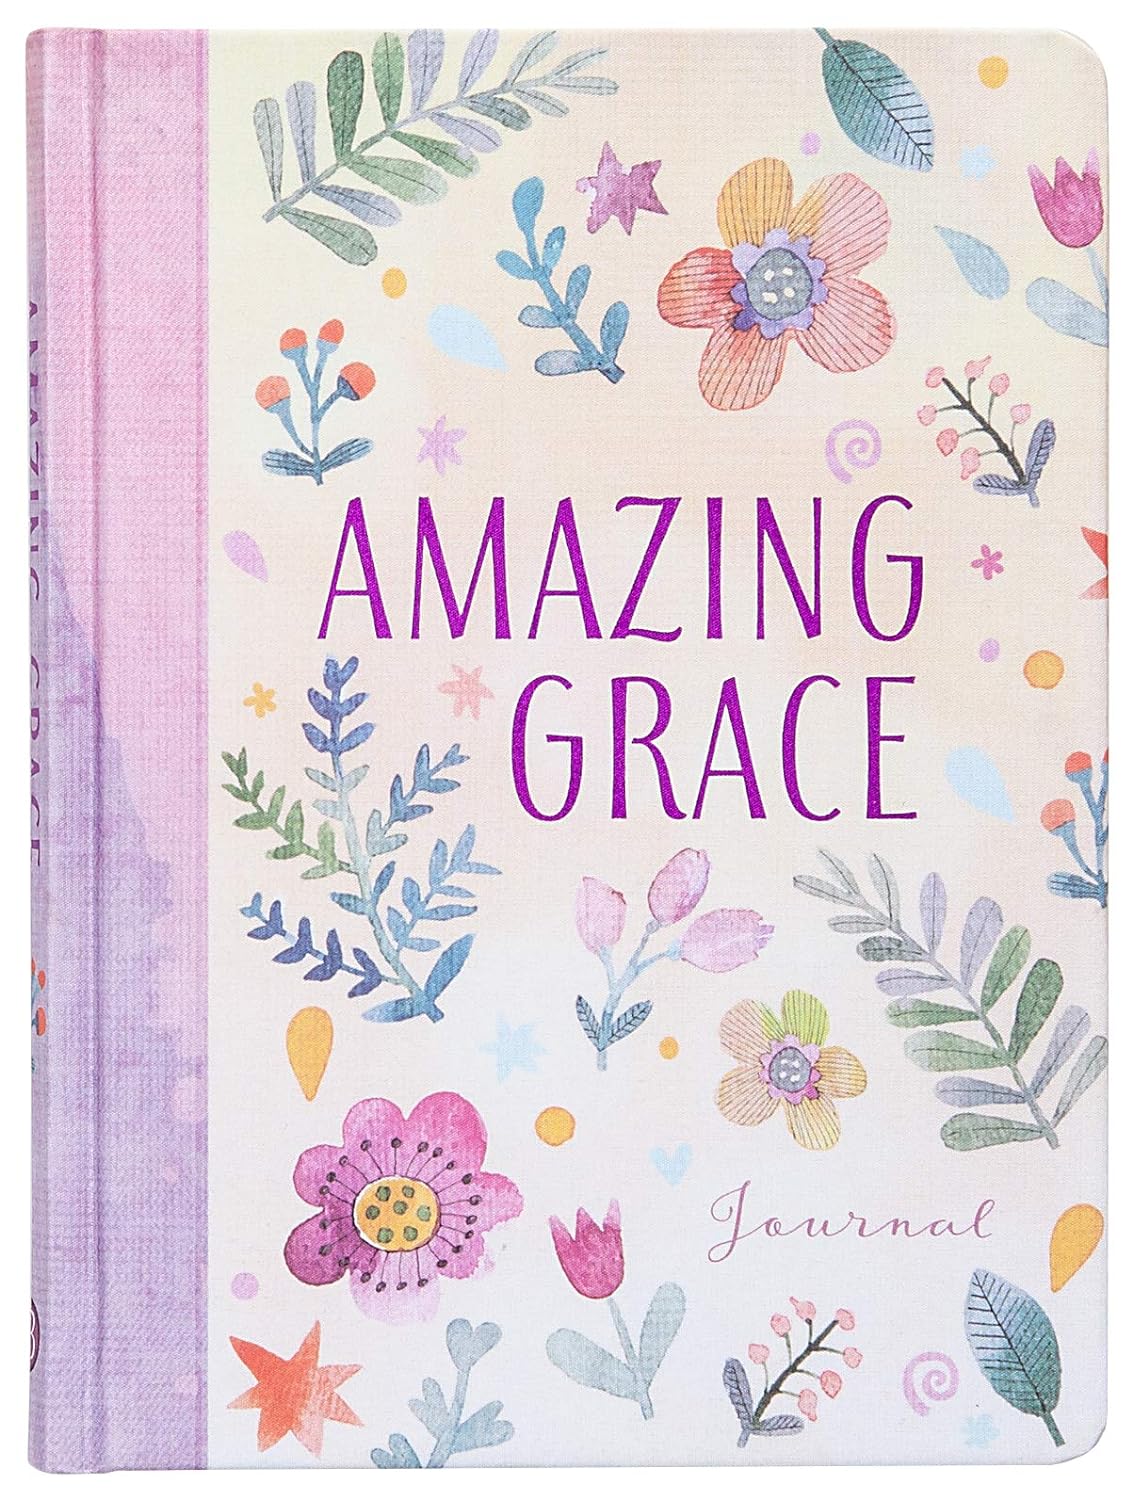 Amazing Grace Fabric Journal - Prayer Journal